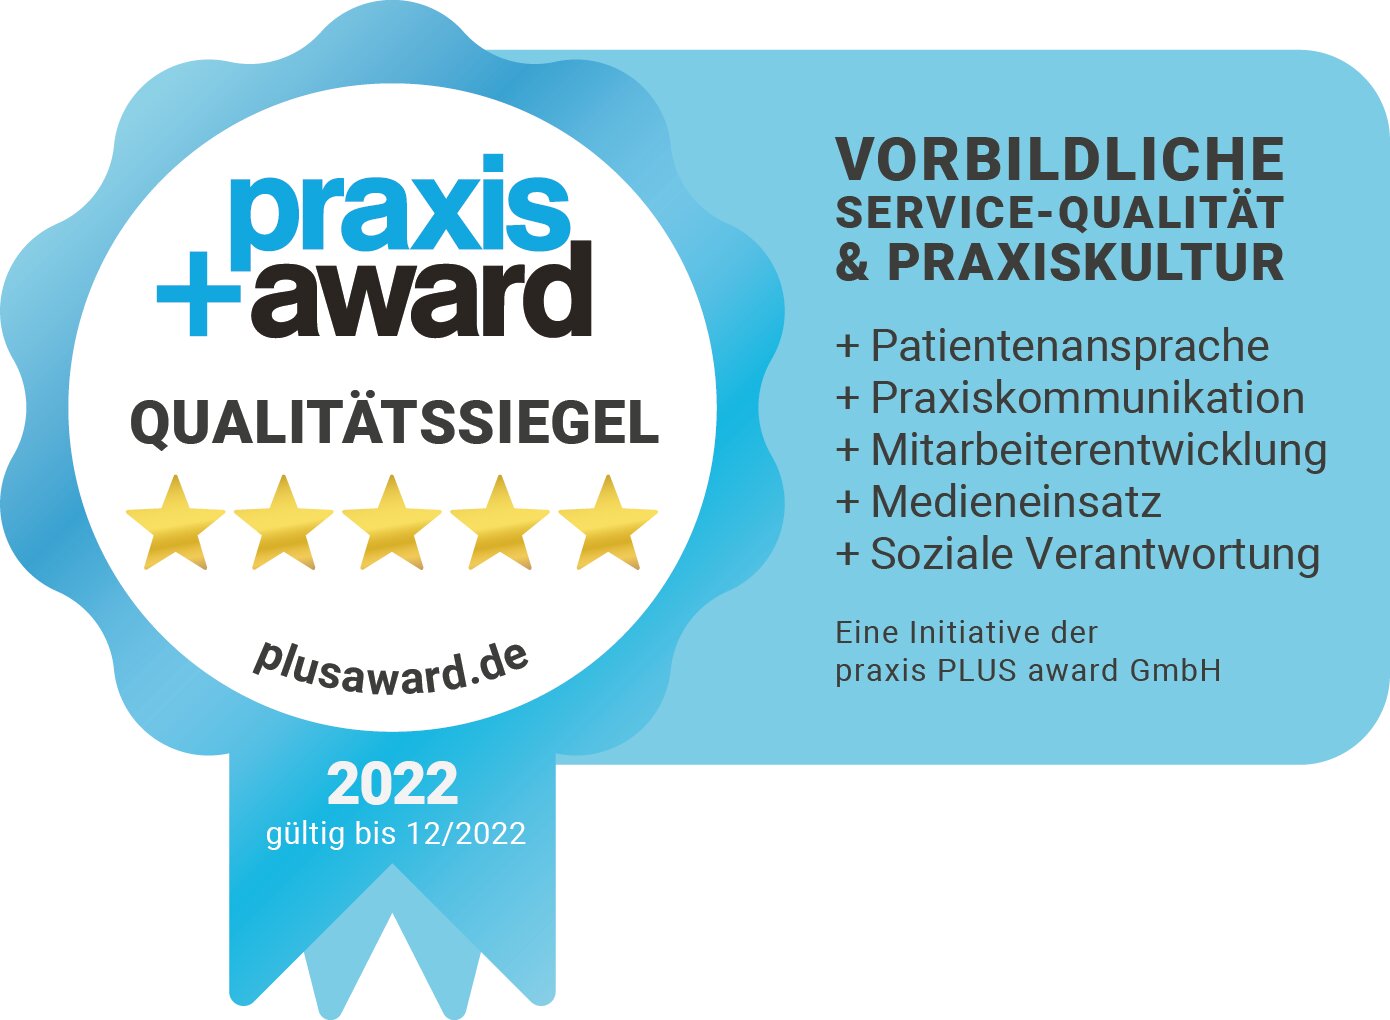 praxis-award-2022